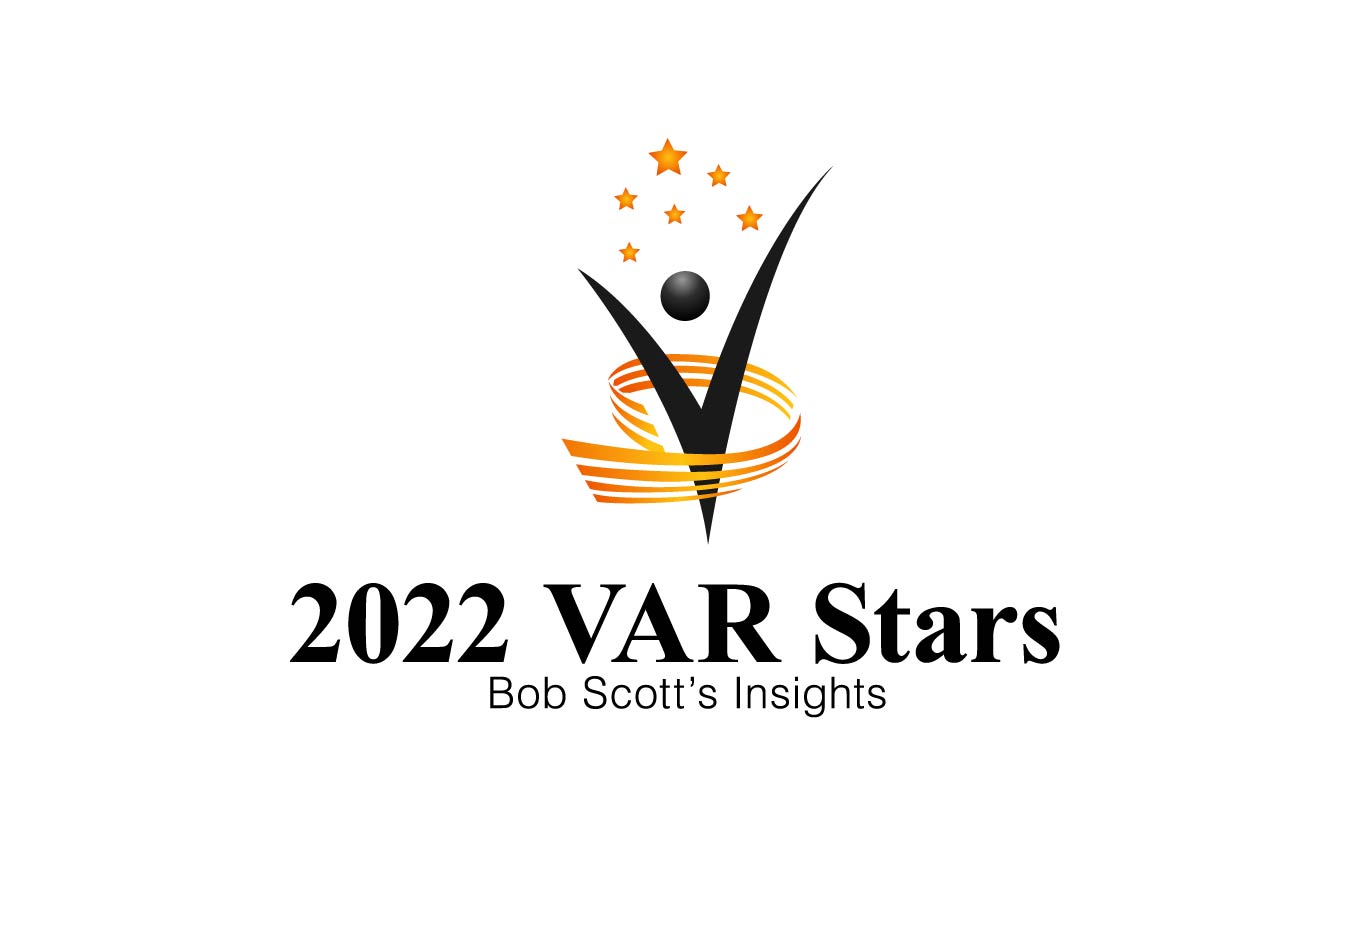 Bob Scott's VAR Stars 2022